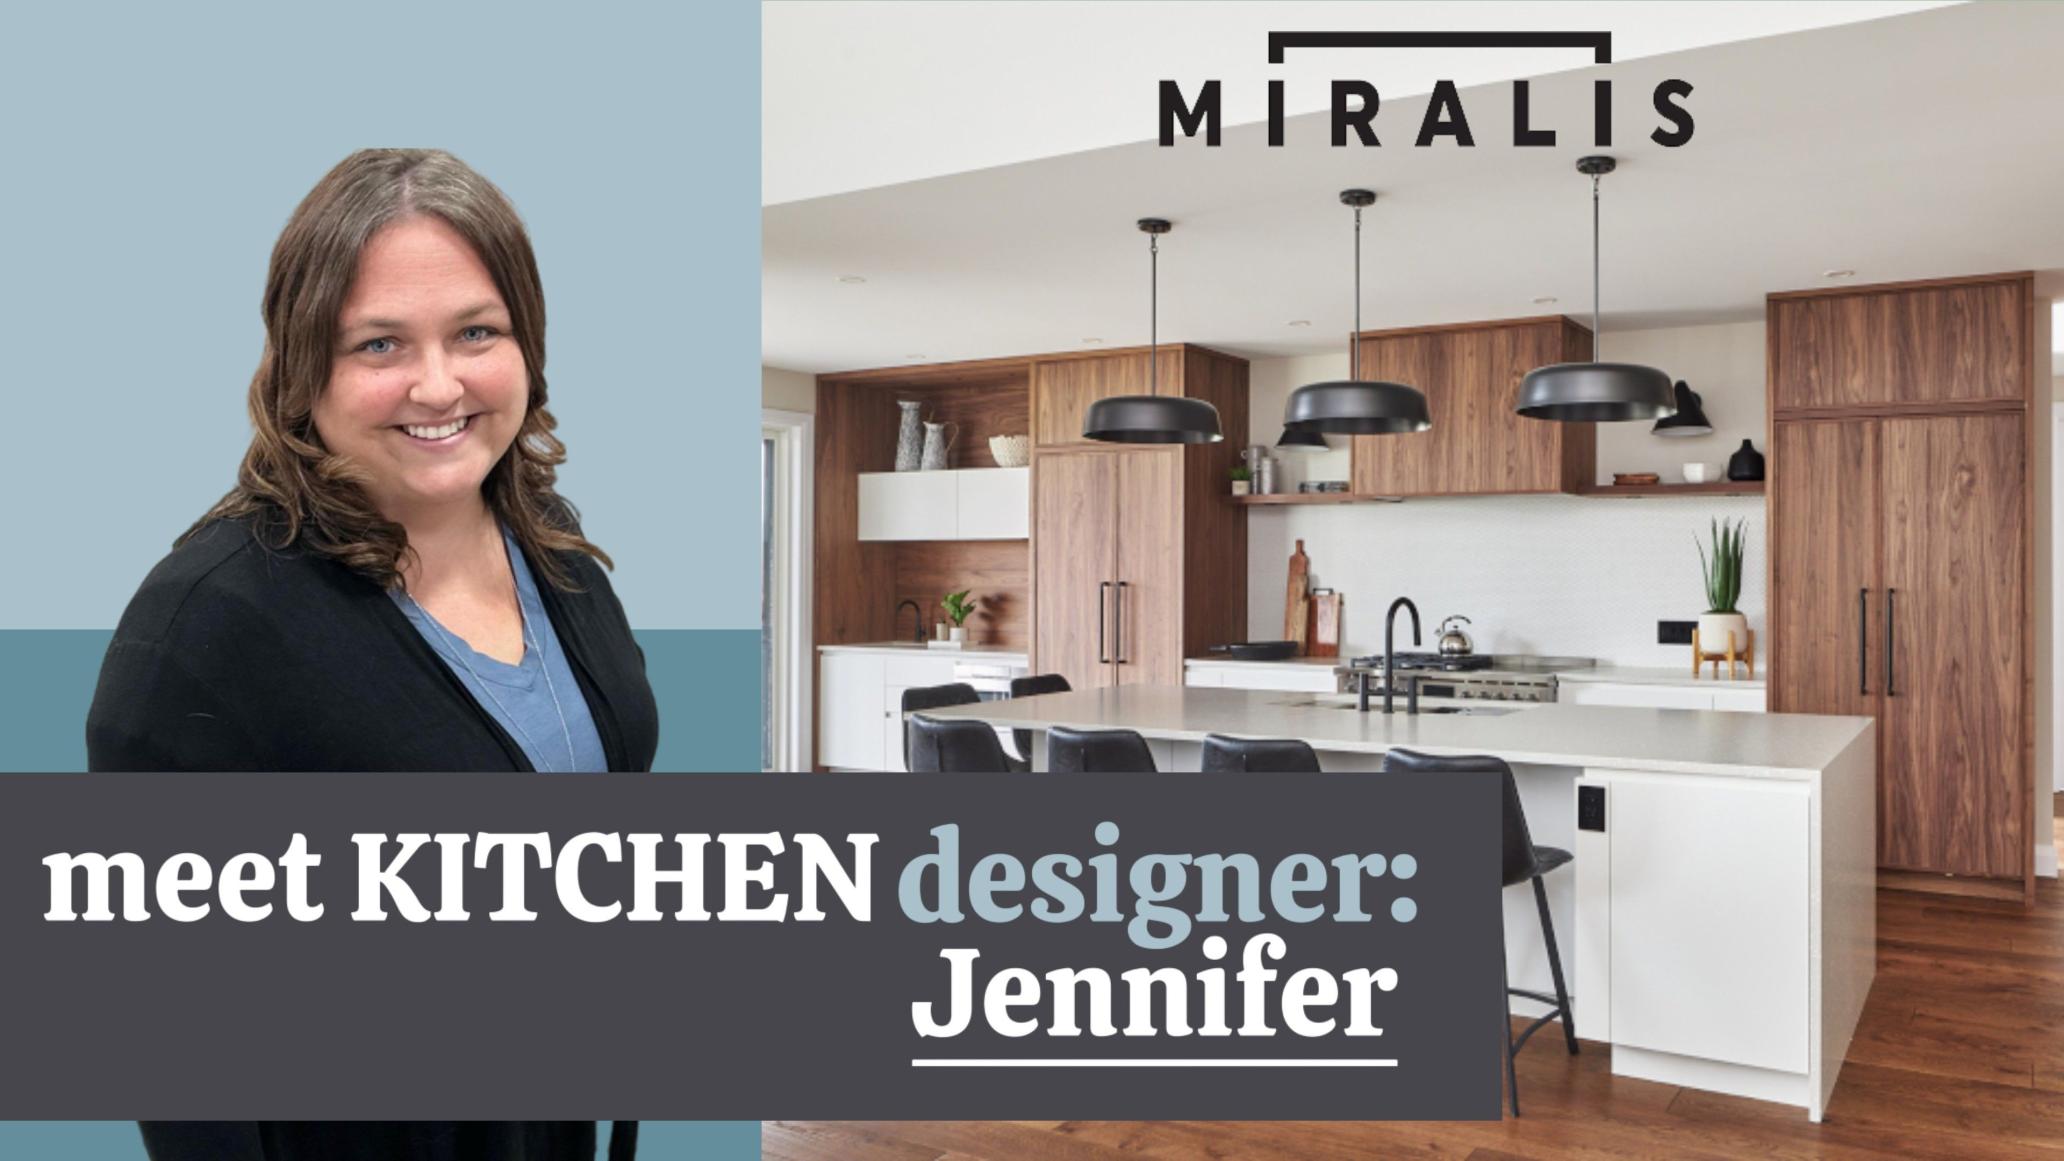 Introducing Jennifer: A Remarkable Kitchen Designer at Soo Mill